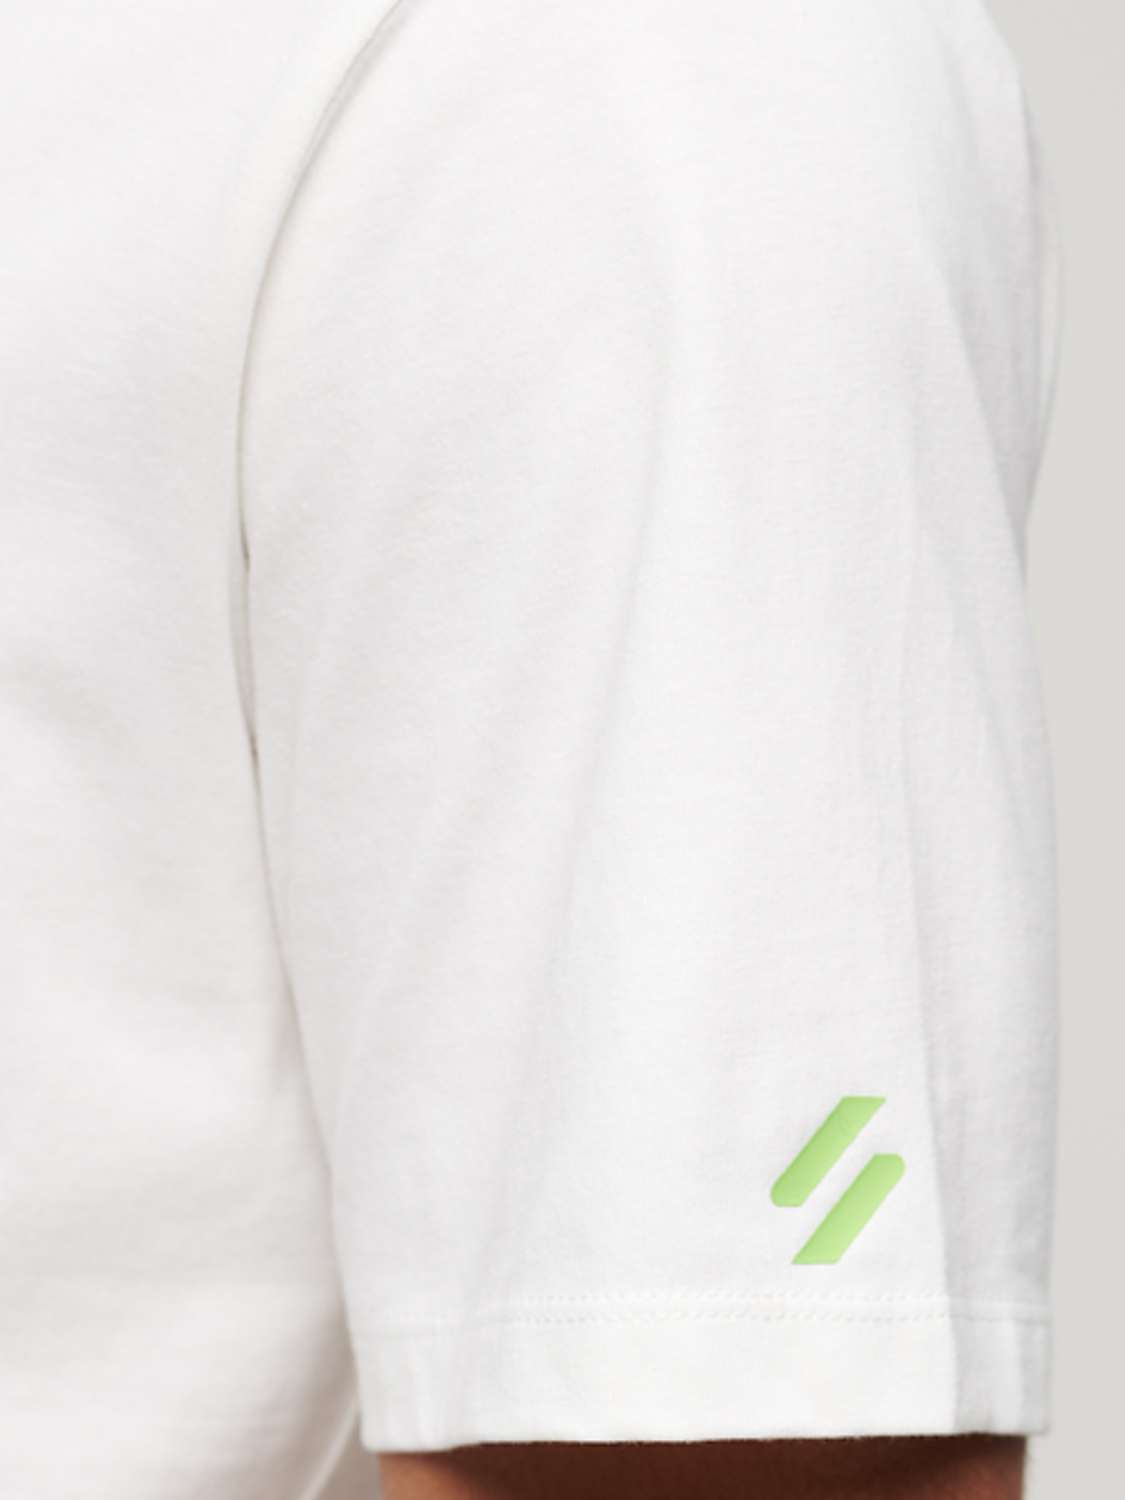 Buy Superdry Sportswear T-Shirt, Brilliant White Online at johnlewis.com